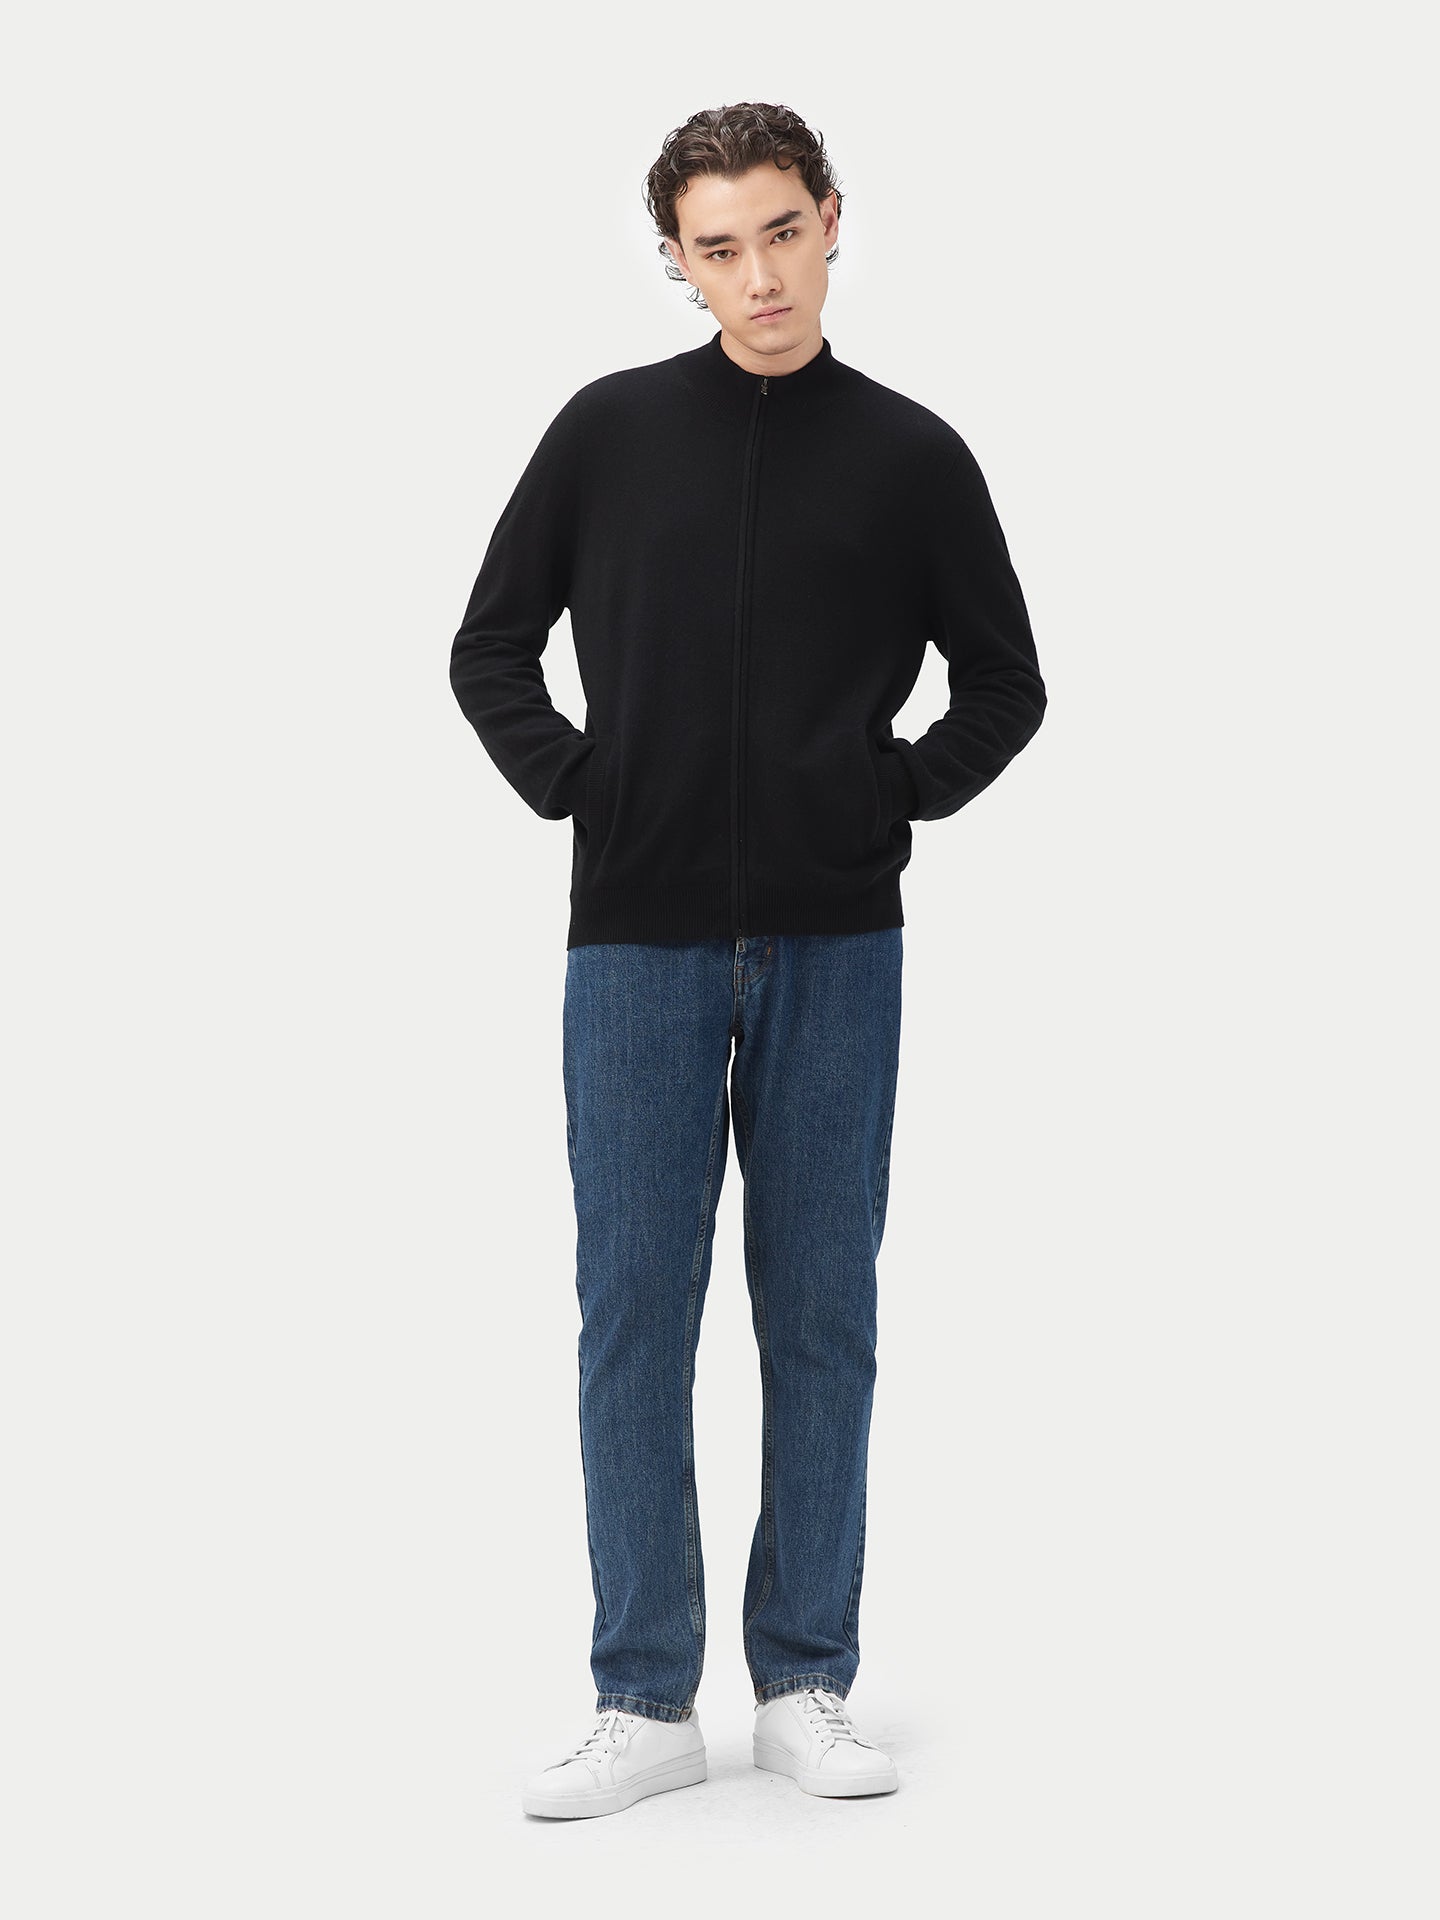 Men's Cashmere Full Zip Cardigan Black - Gobi Cashmere